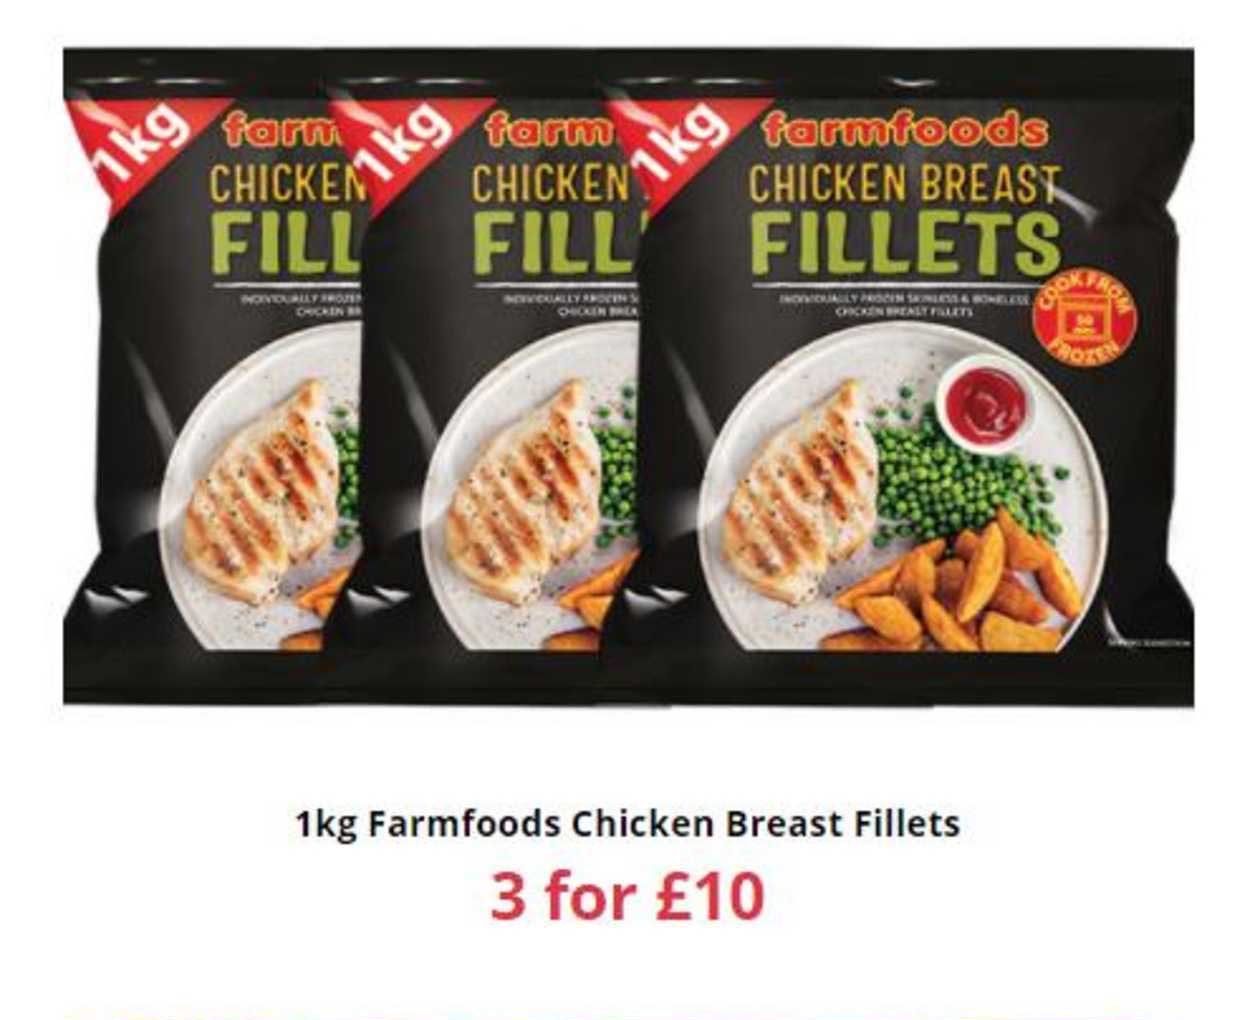 Farmfoods 1Kg Farmfoods Chicken Breast Fillets